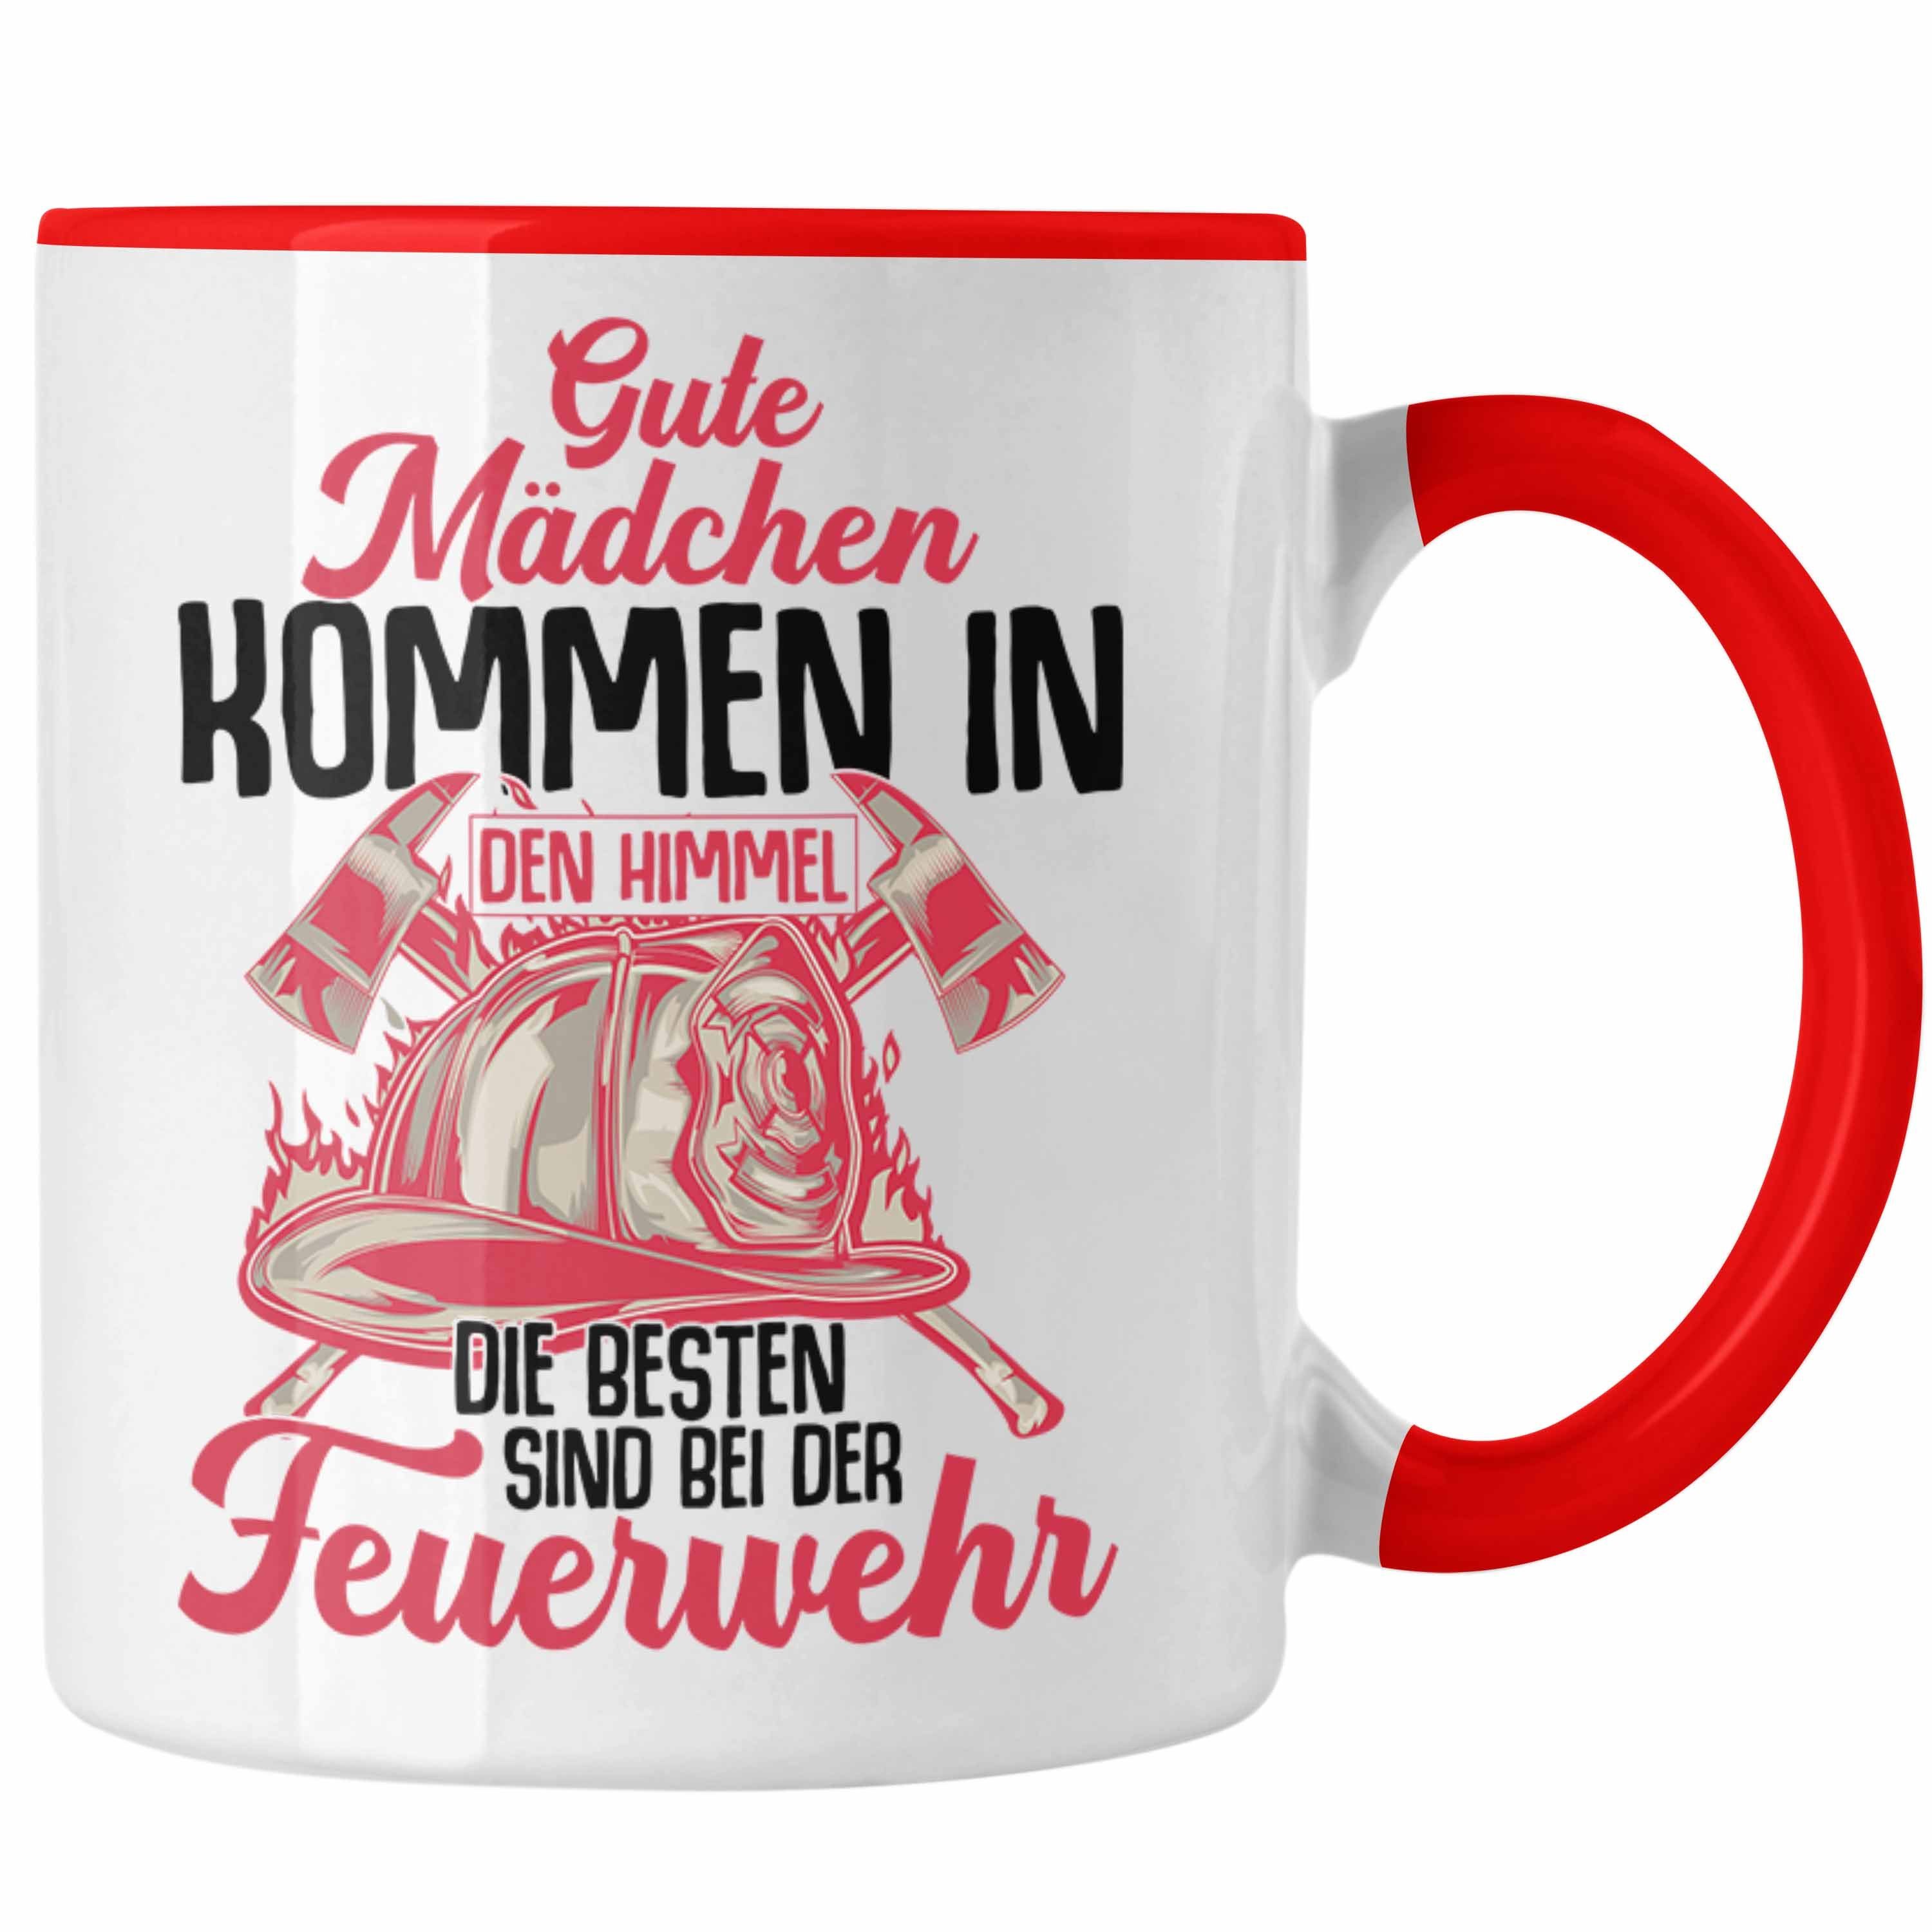 Trendation Tasse Trendation - Feuerwehr Frau Tasse Geschenk Frauen Feuerwehrfrauen Spruch Geschenkidee Rot